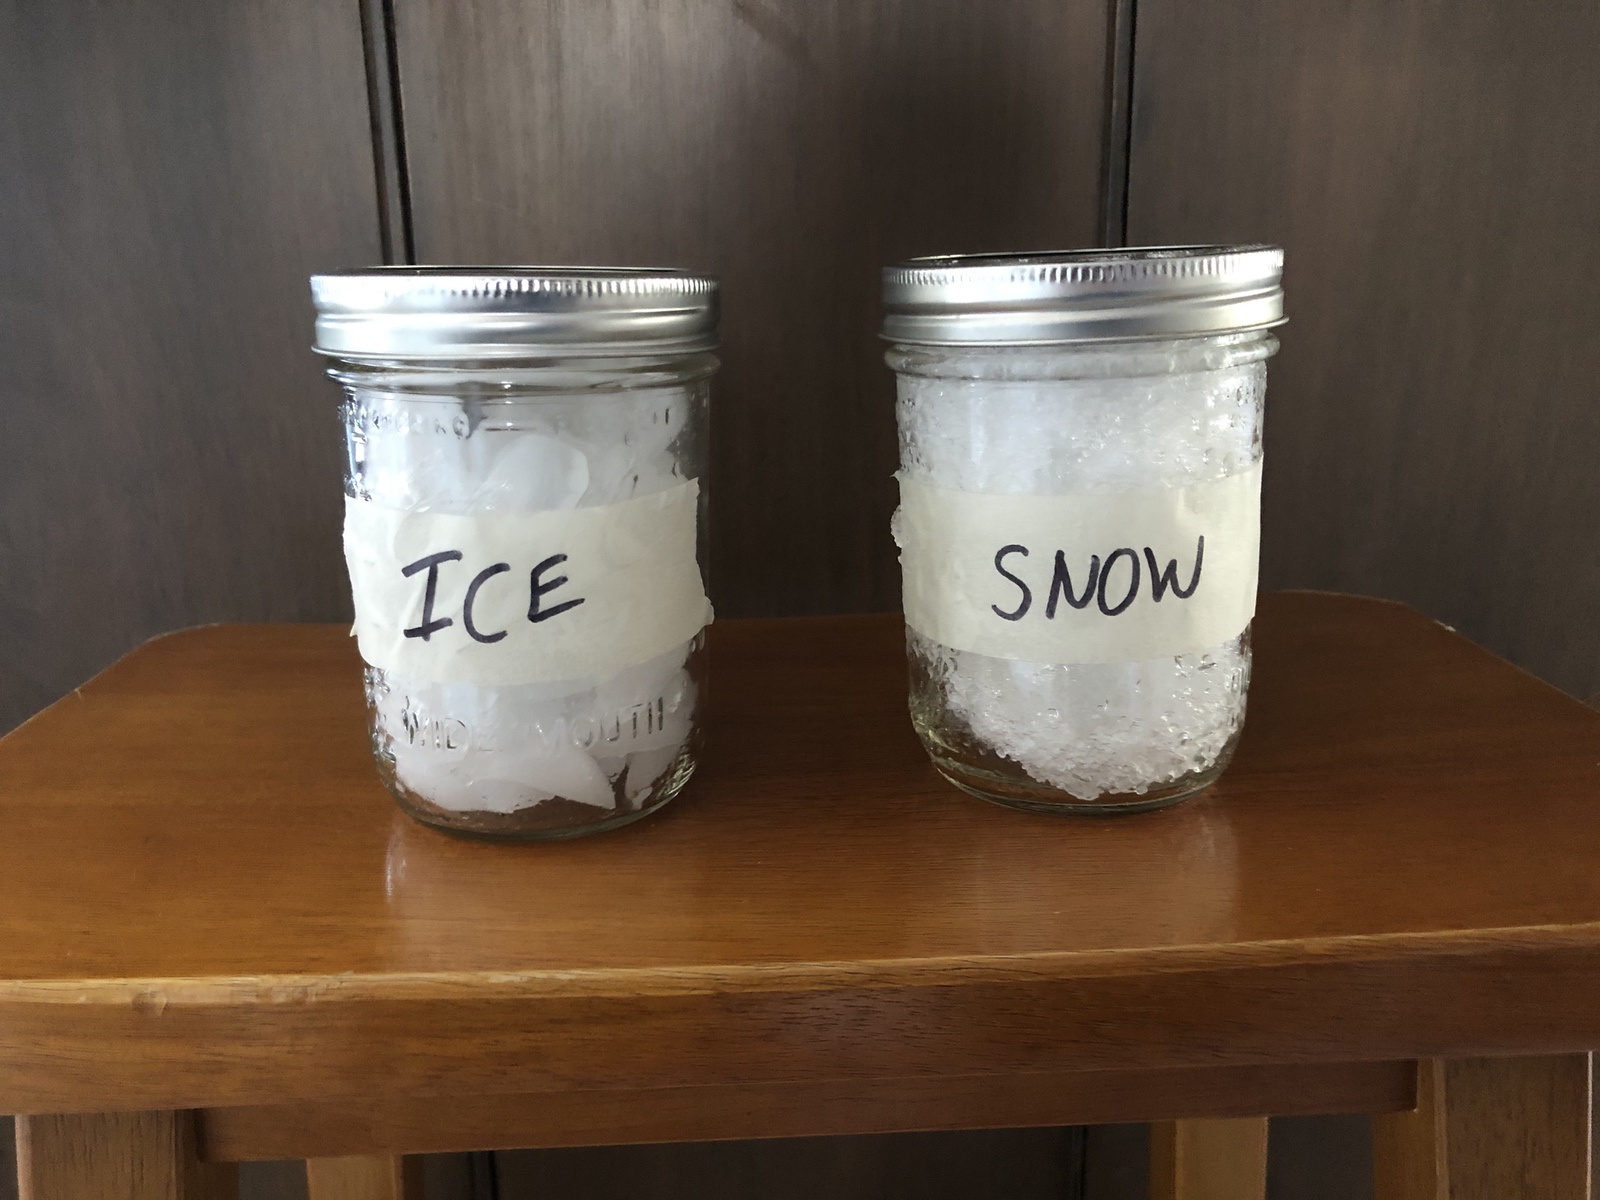 Melting Snow Ice Experiment WinterKids